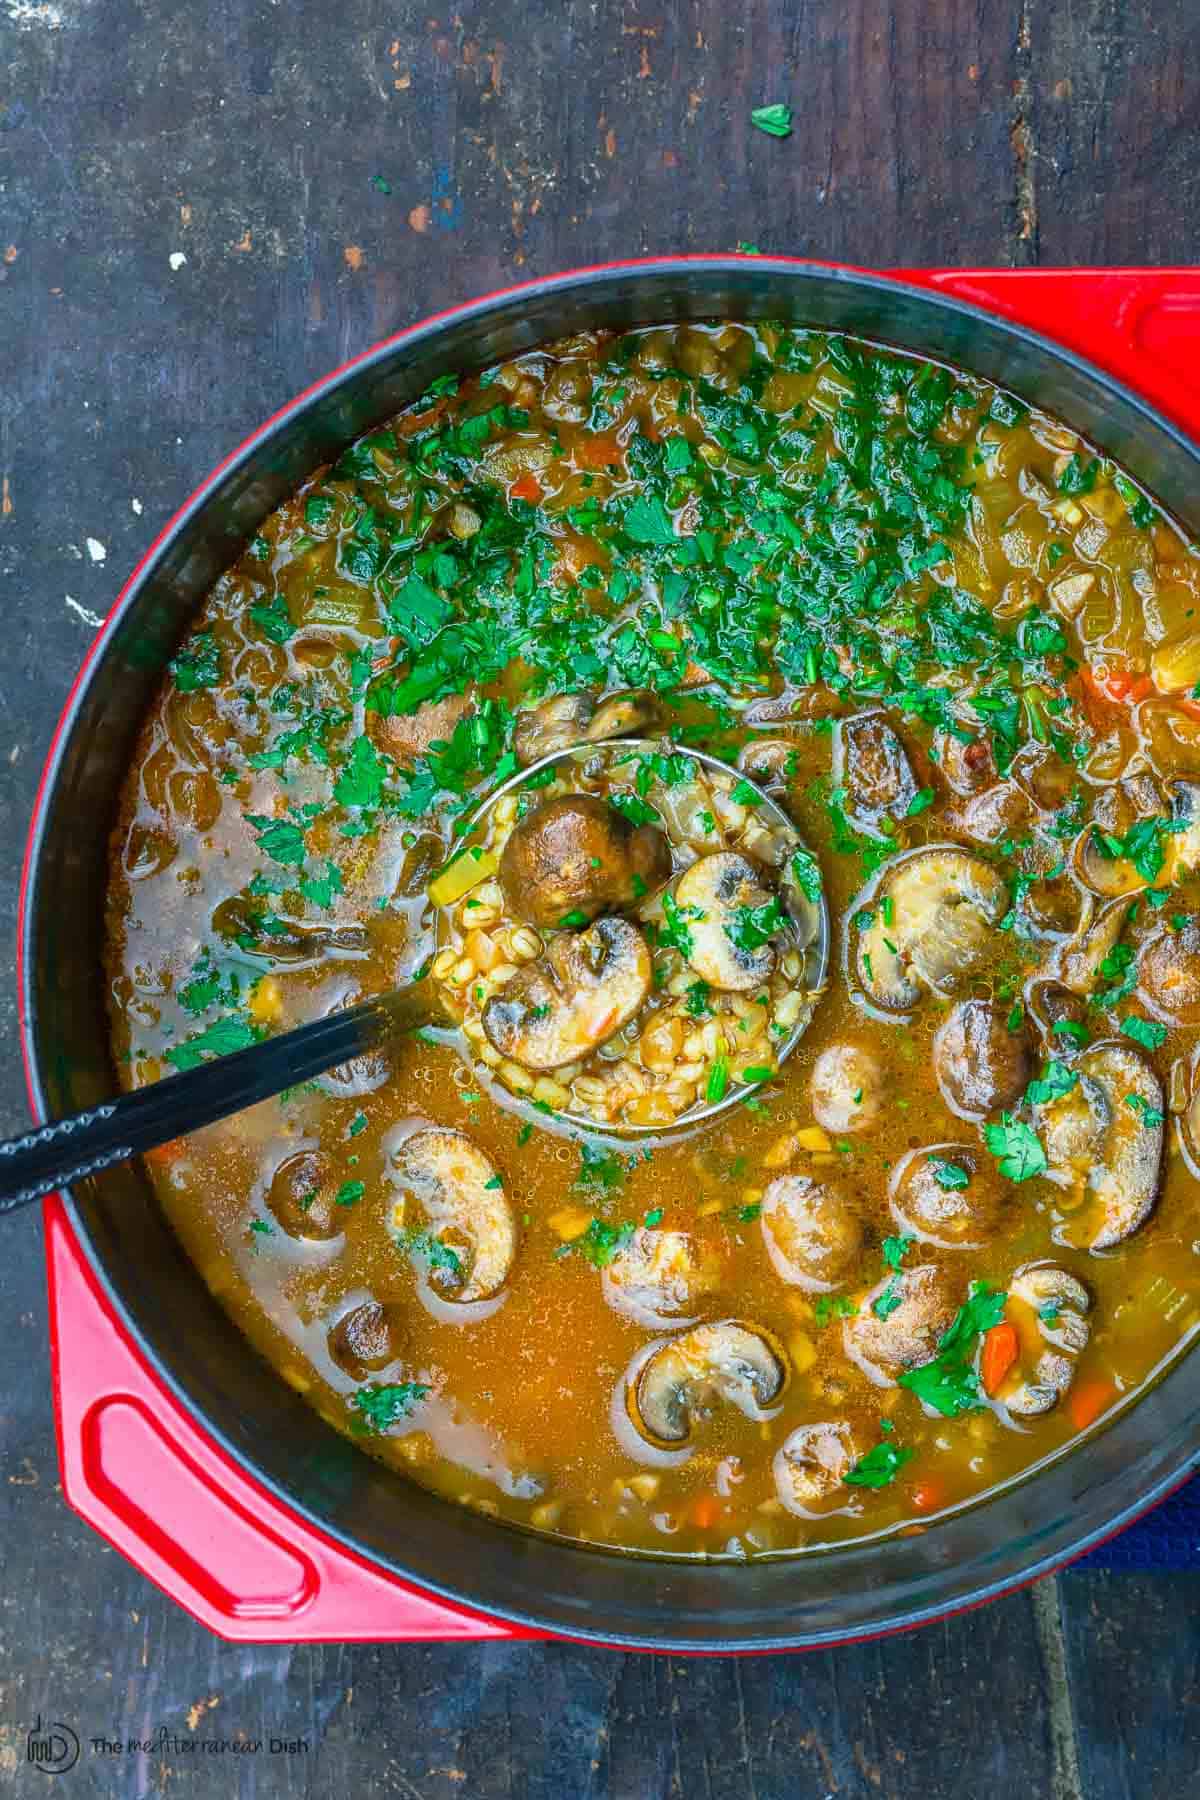 https://www.themediterraneandish.com/wp-content/uploads/2020/04/Mushroom-barley-soup-recipe-6.jpg